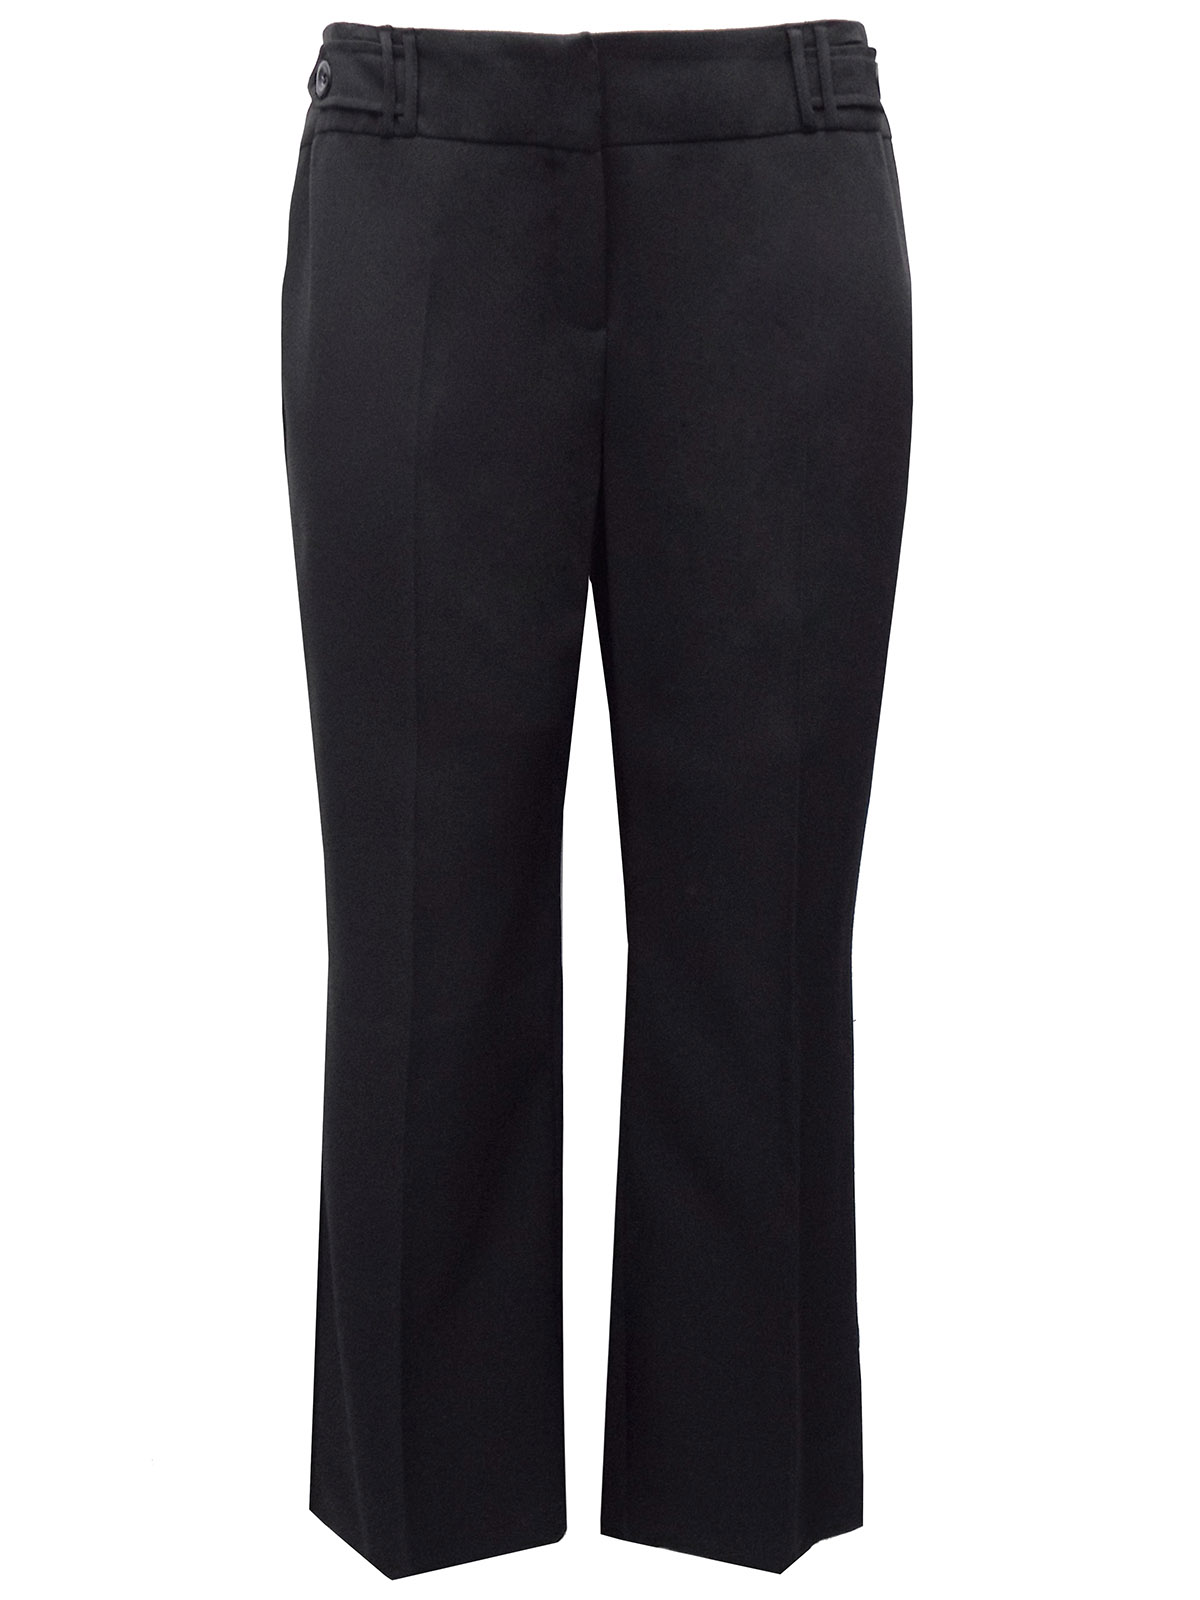 3VANS BLACK Straight Leg Button Detail Trousers - Plus Size 14 to 32